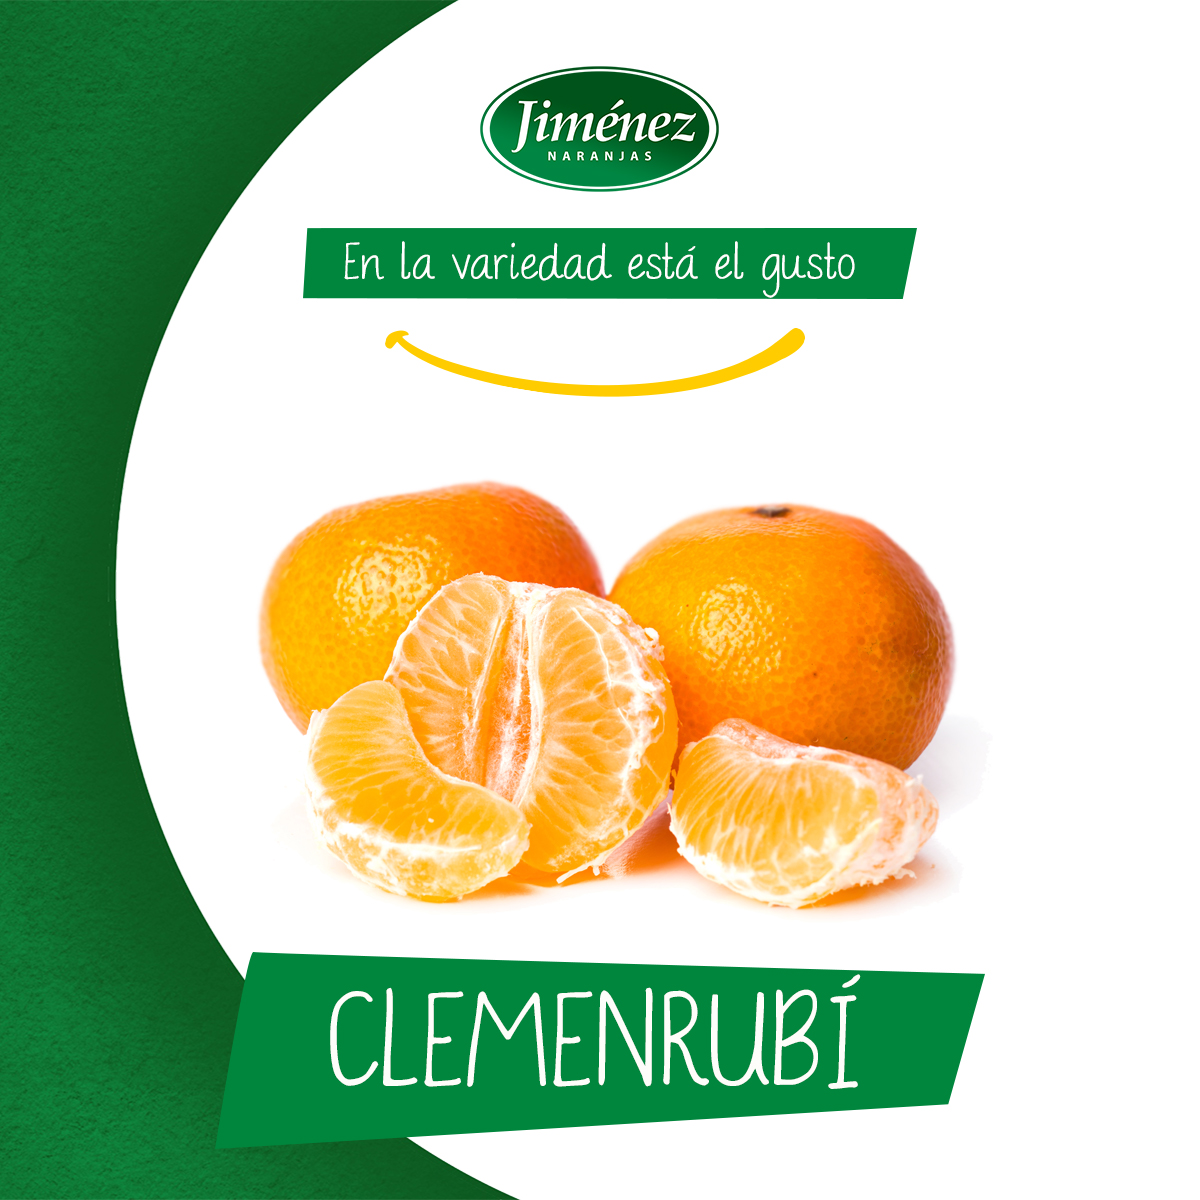 Naranjas Jiménez: variedades - ClemenRubí